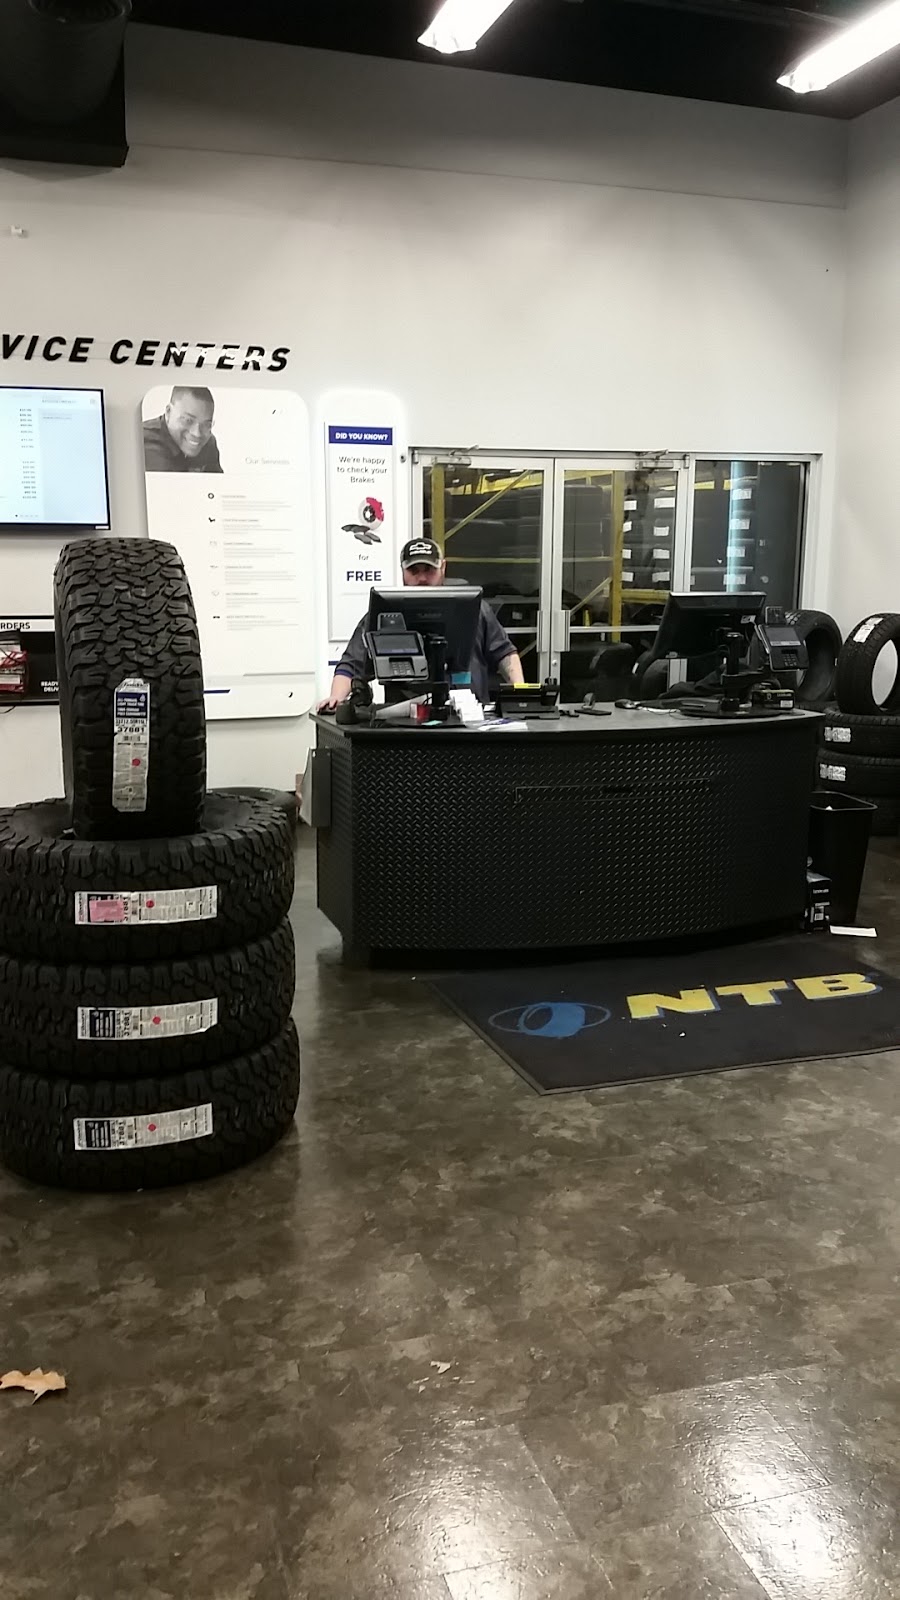 Mavis Tires & Brakes | 80 Cluff Rd, Salem, NH 03079, USA | Phone: (617) 420-5554